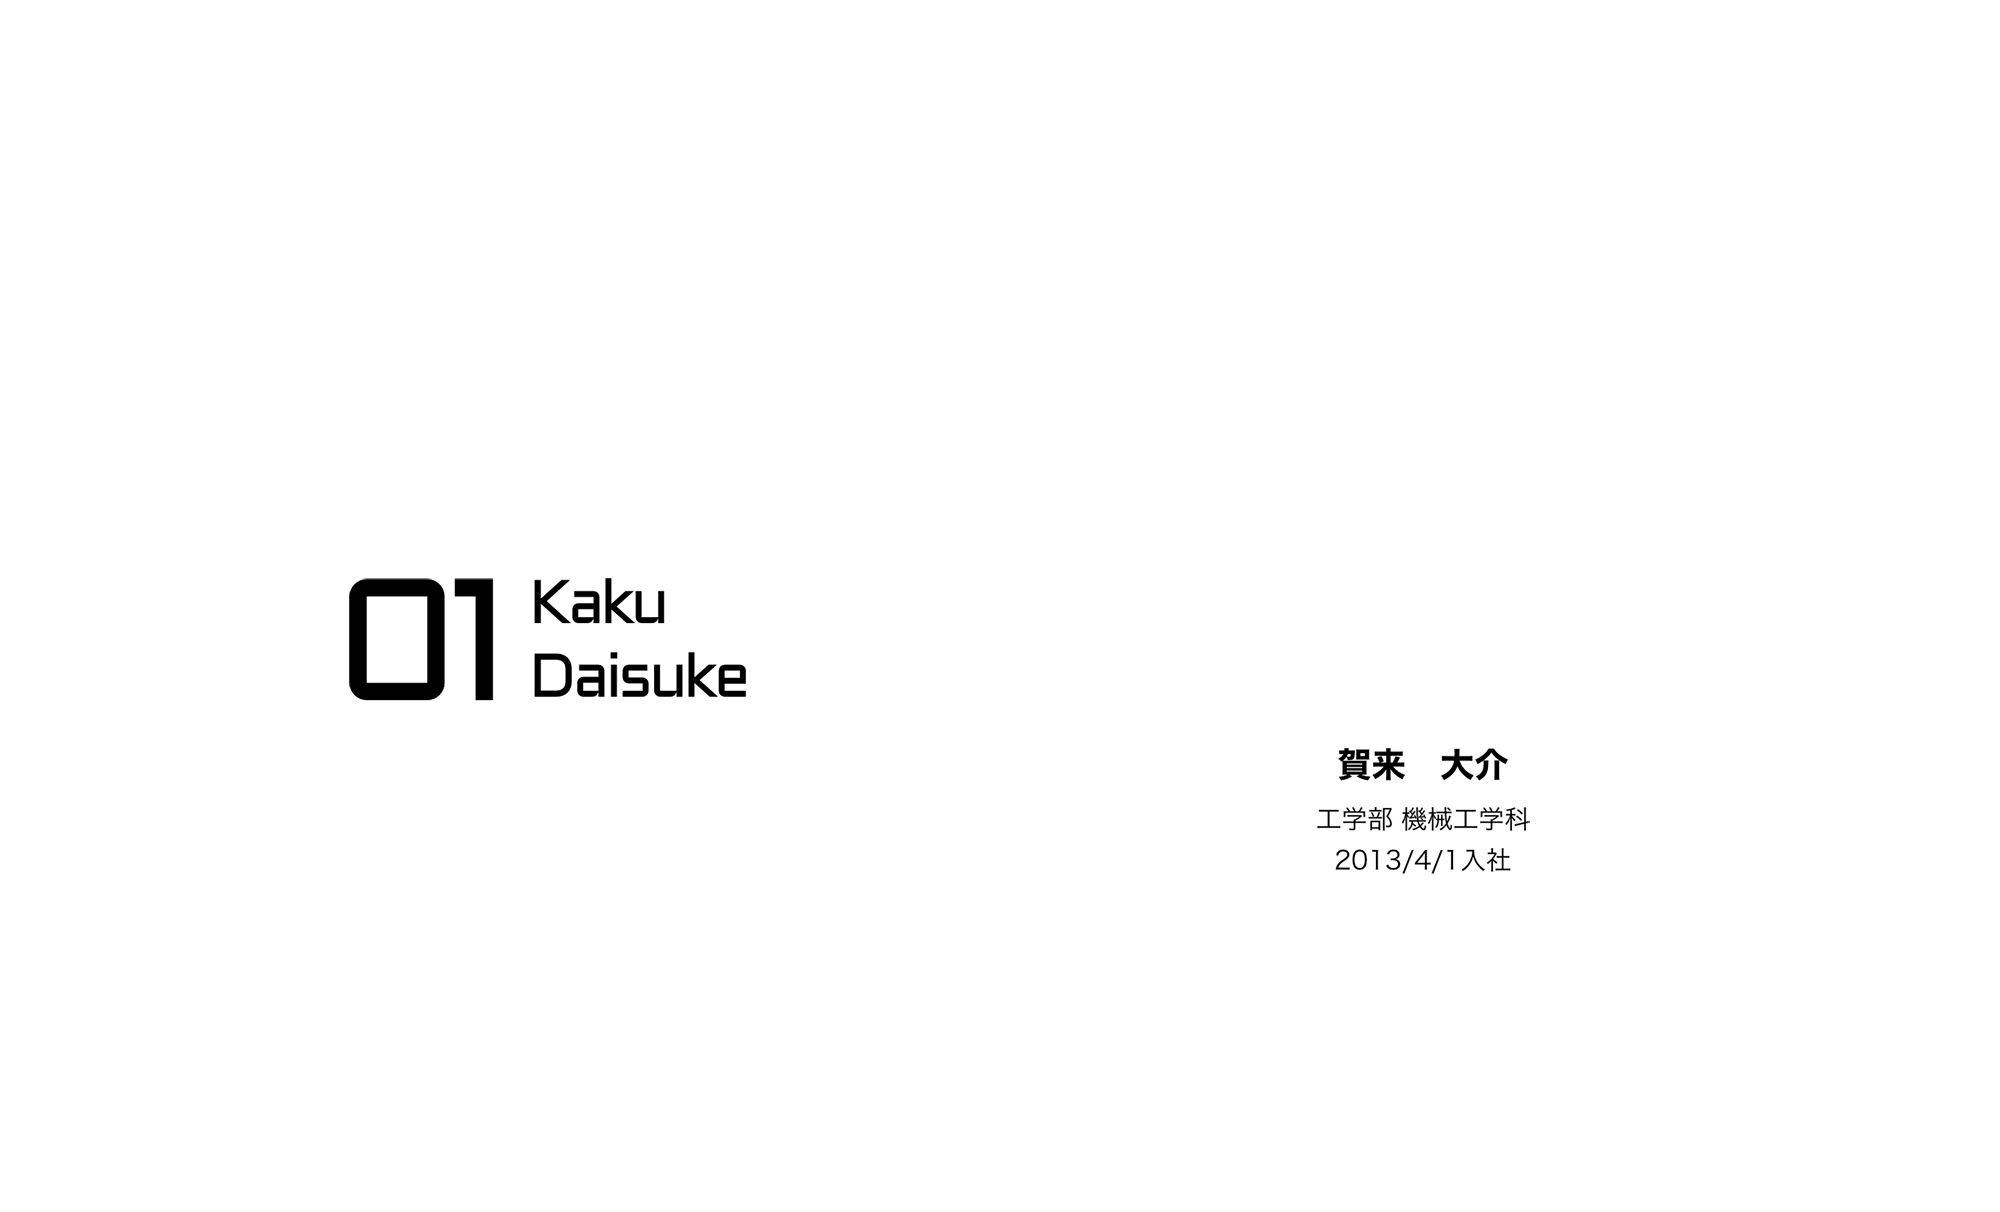 01 Kaku Daisuke / 賀来　大介 / 工学部 機械工学科 / 2013/4/1入社